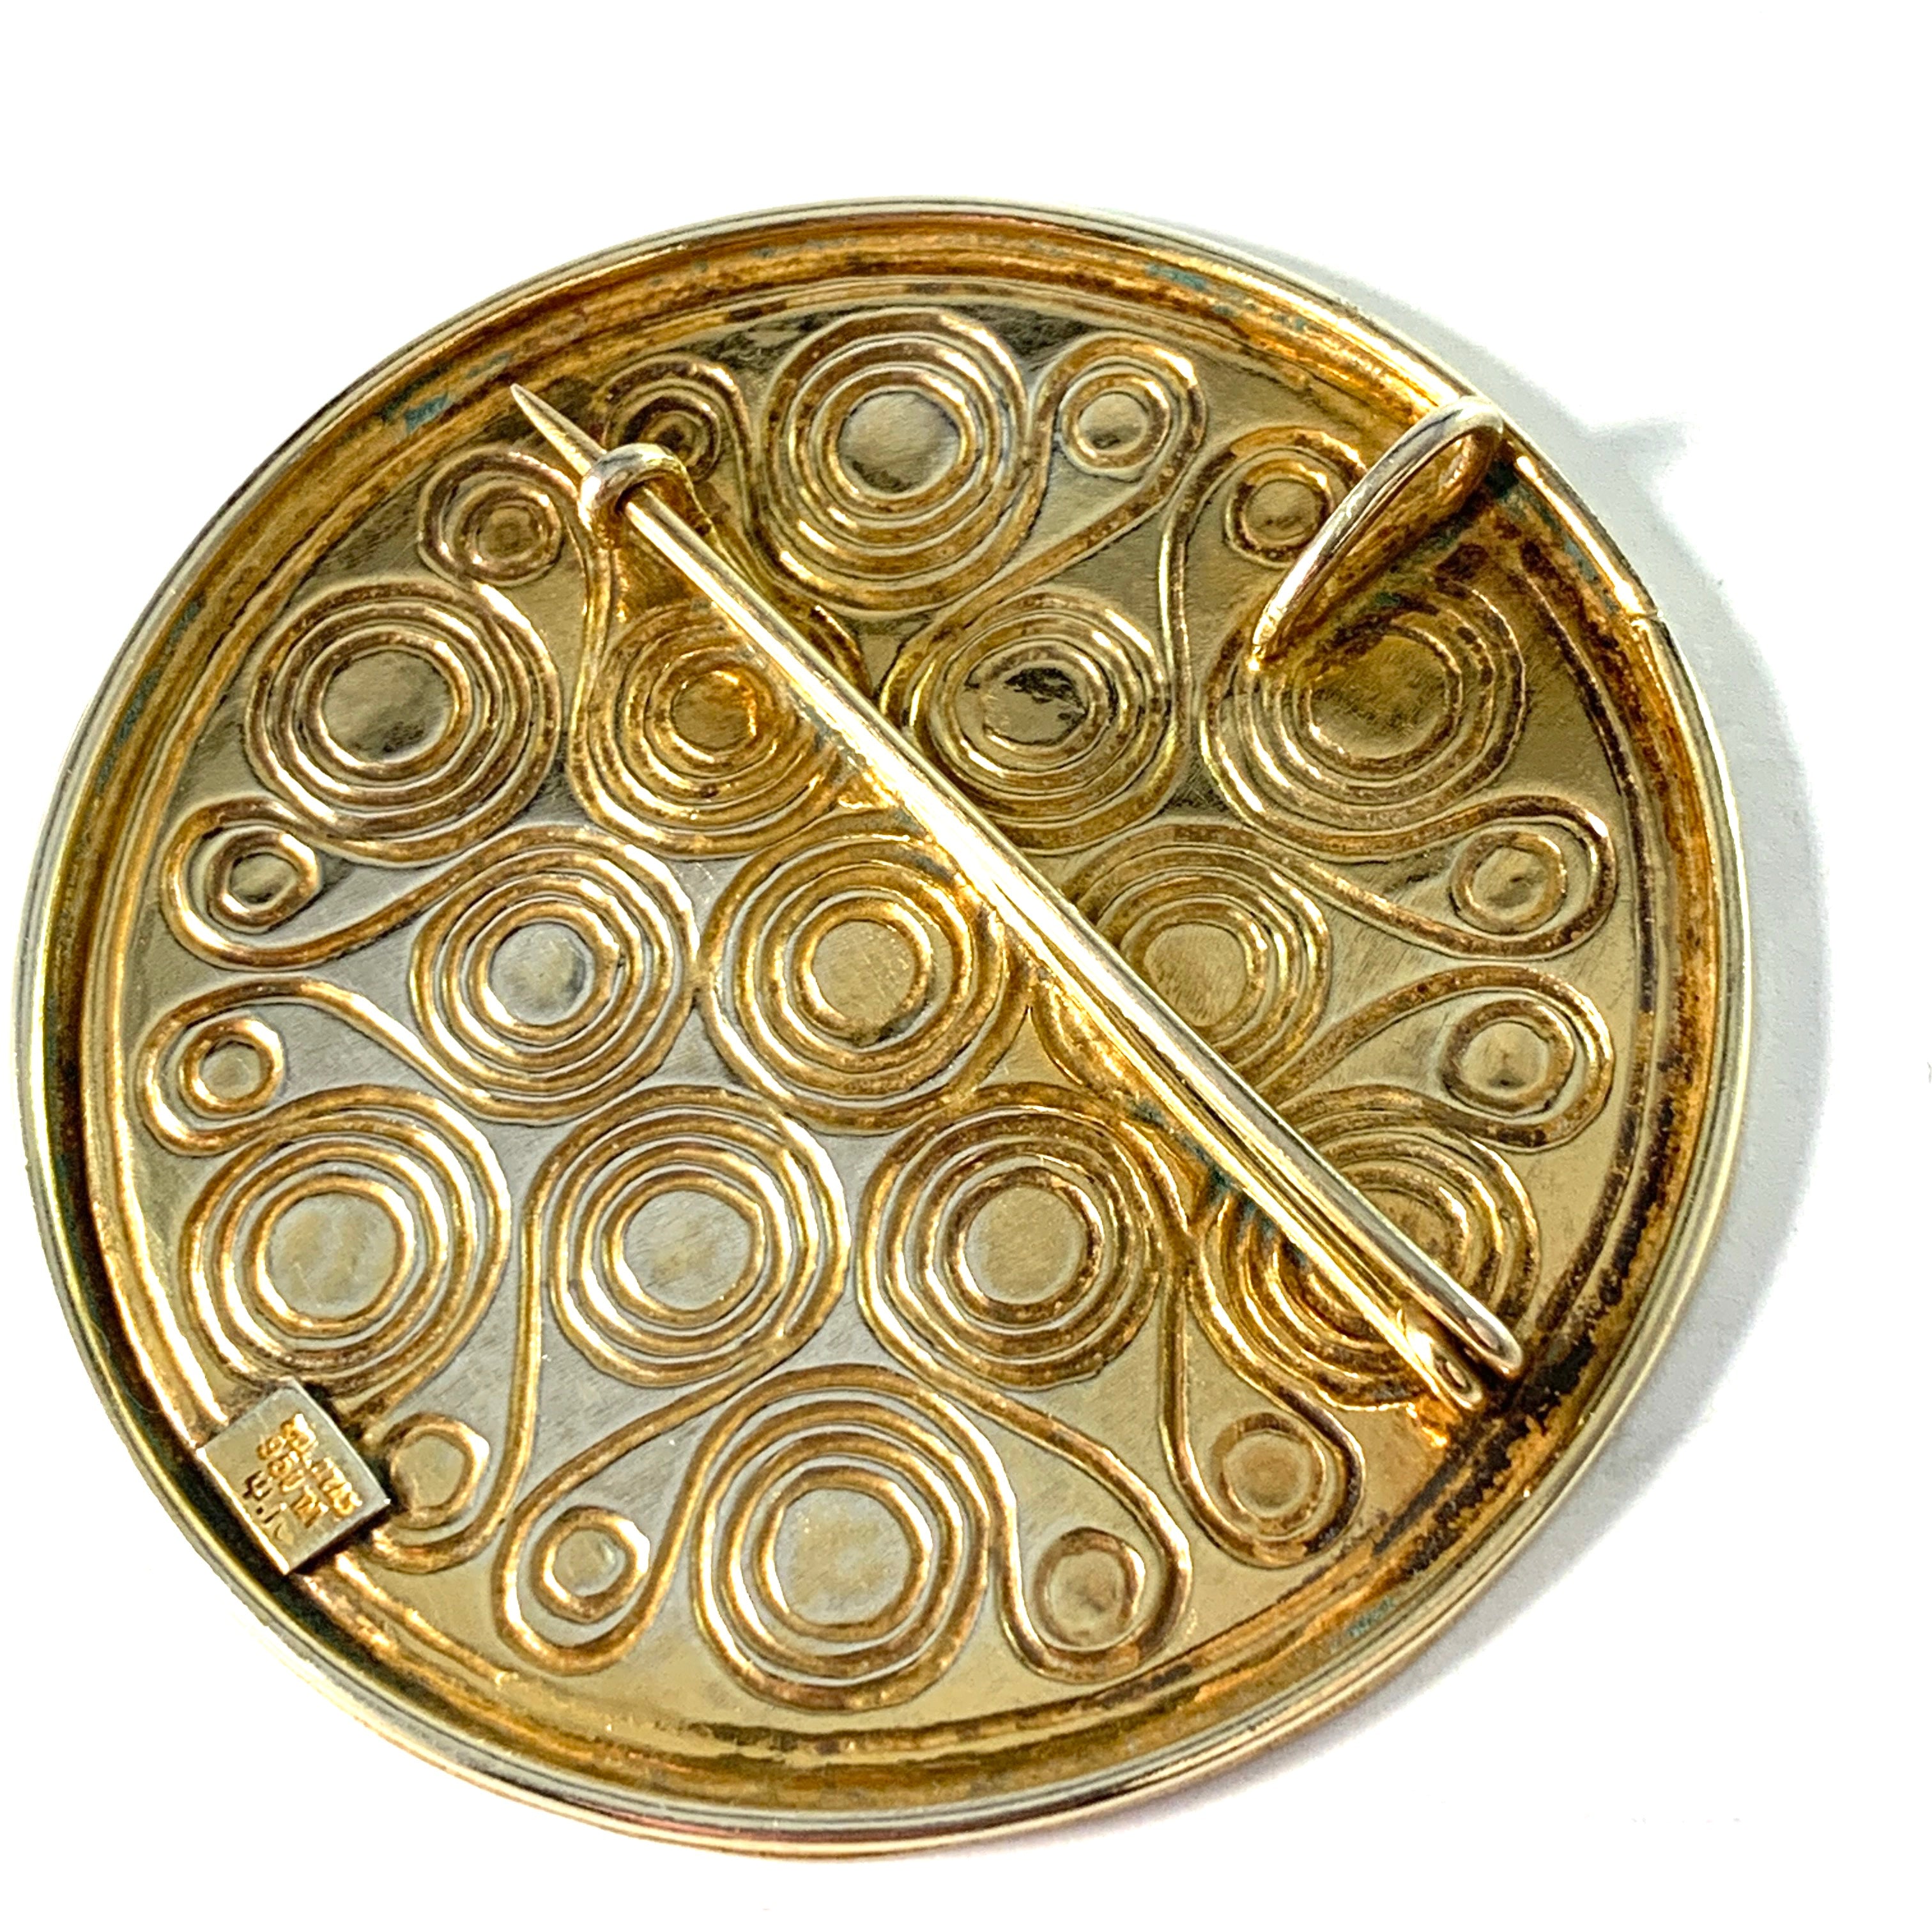 Zolotas, Greece. Vintage gilt Sterling 950 Silver Brooch Pendant.